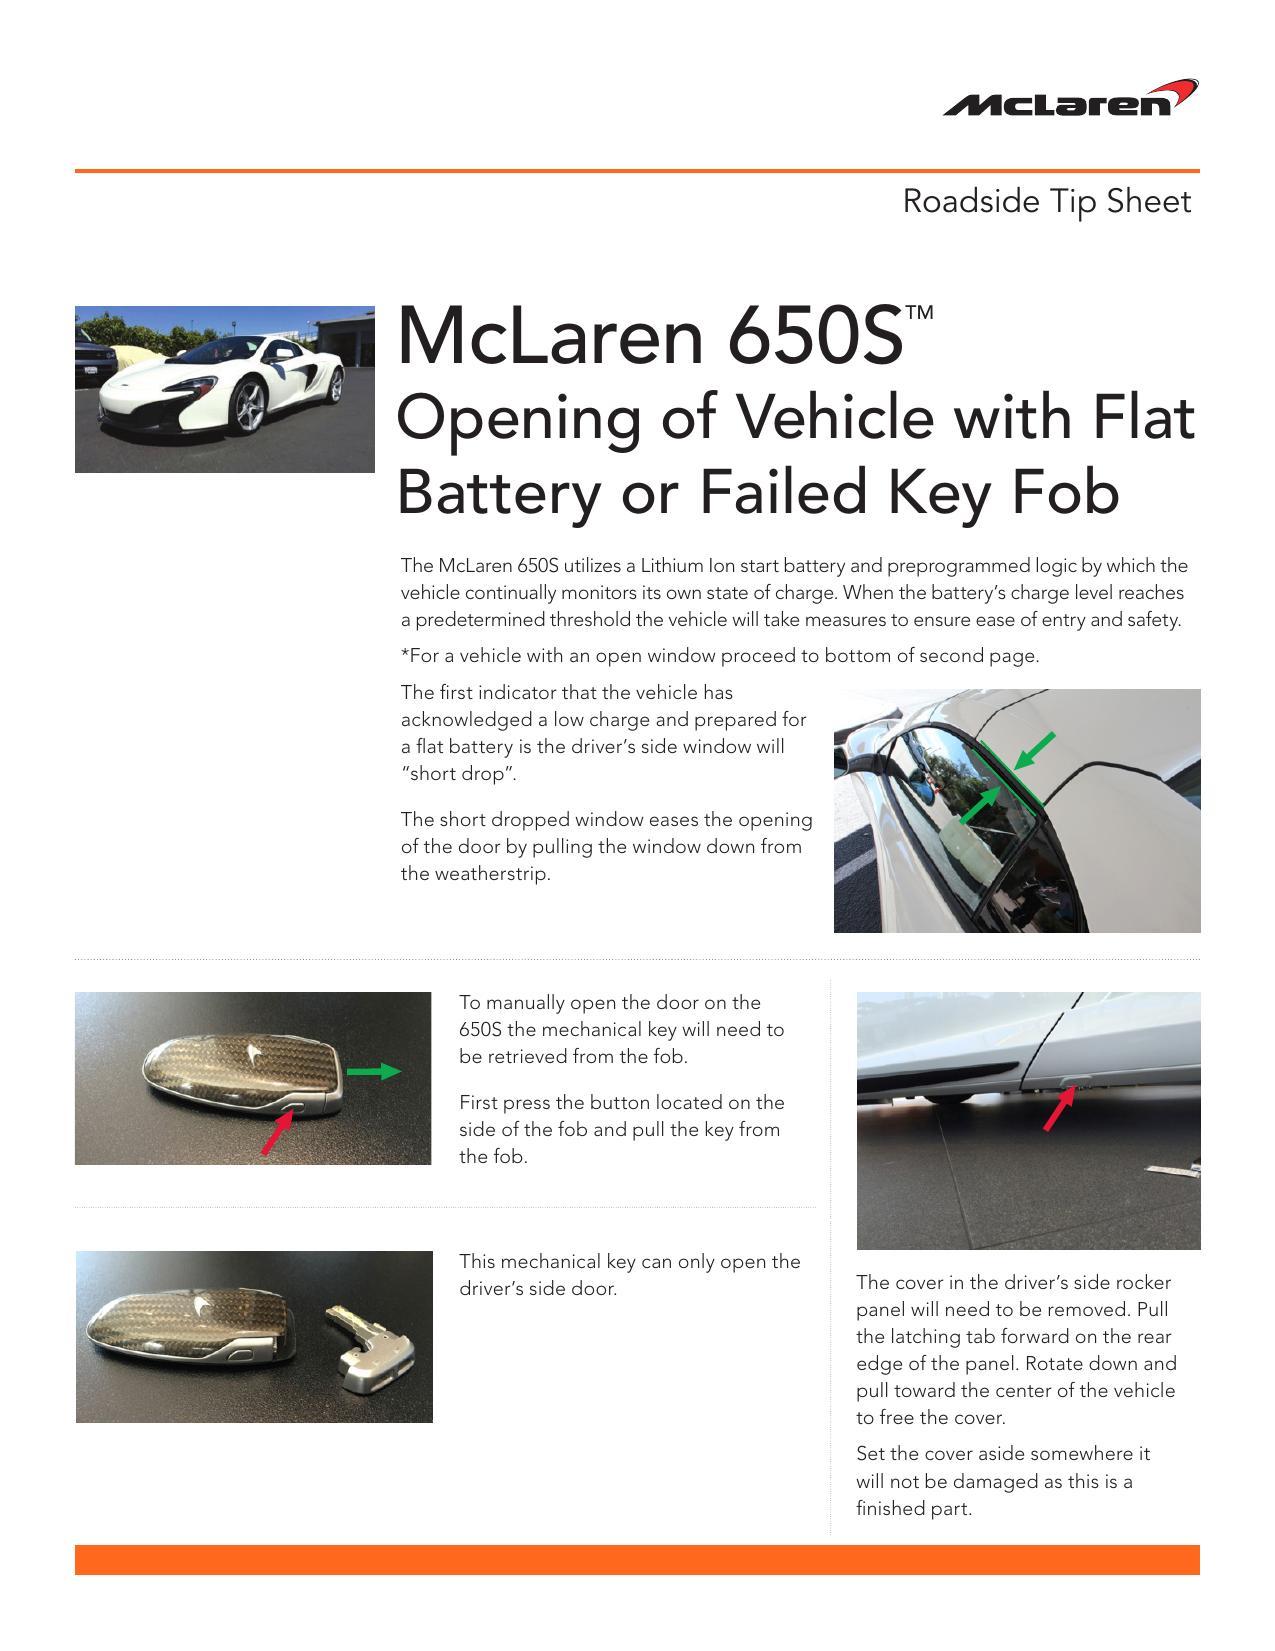 mclaren-650s-roadside-tip-sheet.pdf